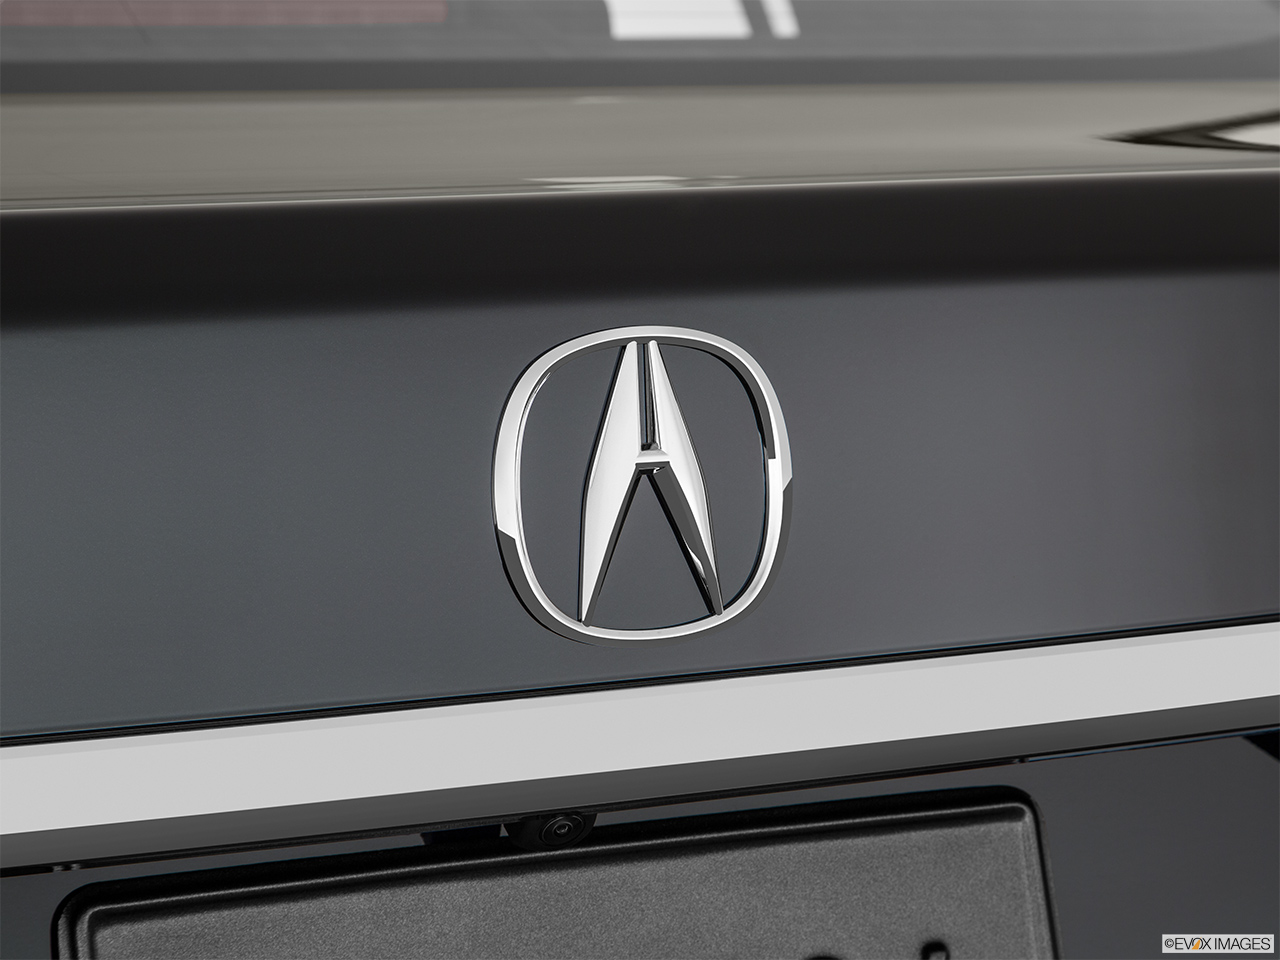 2019 Acura RLX Base Rear manufacture badge/emblem 